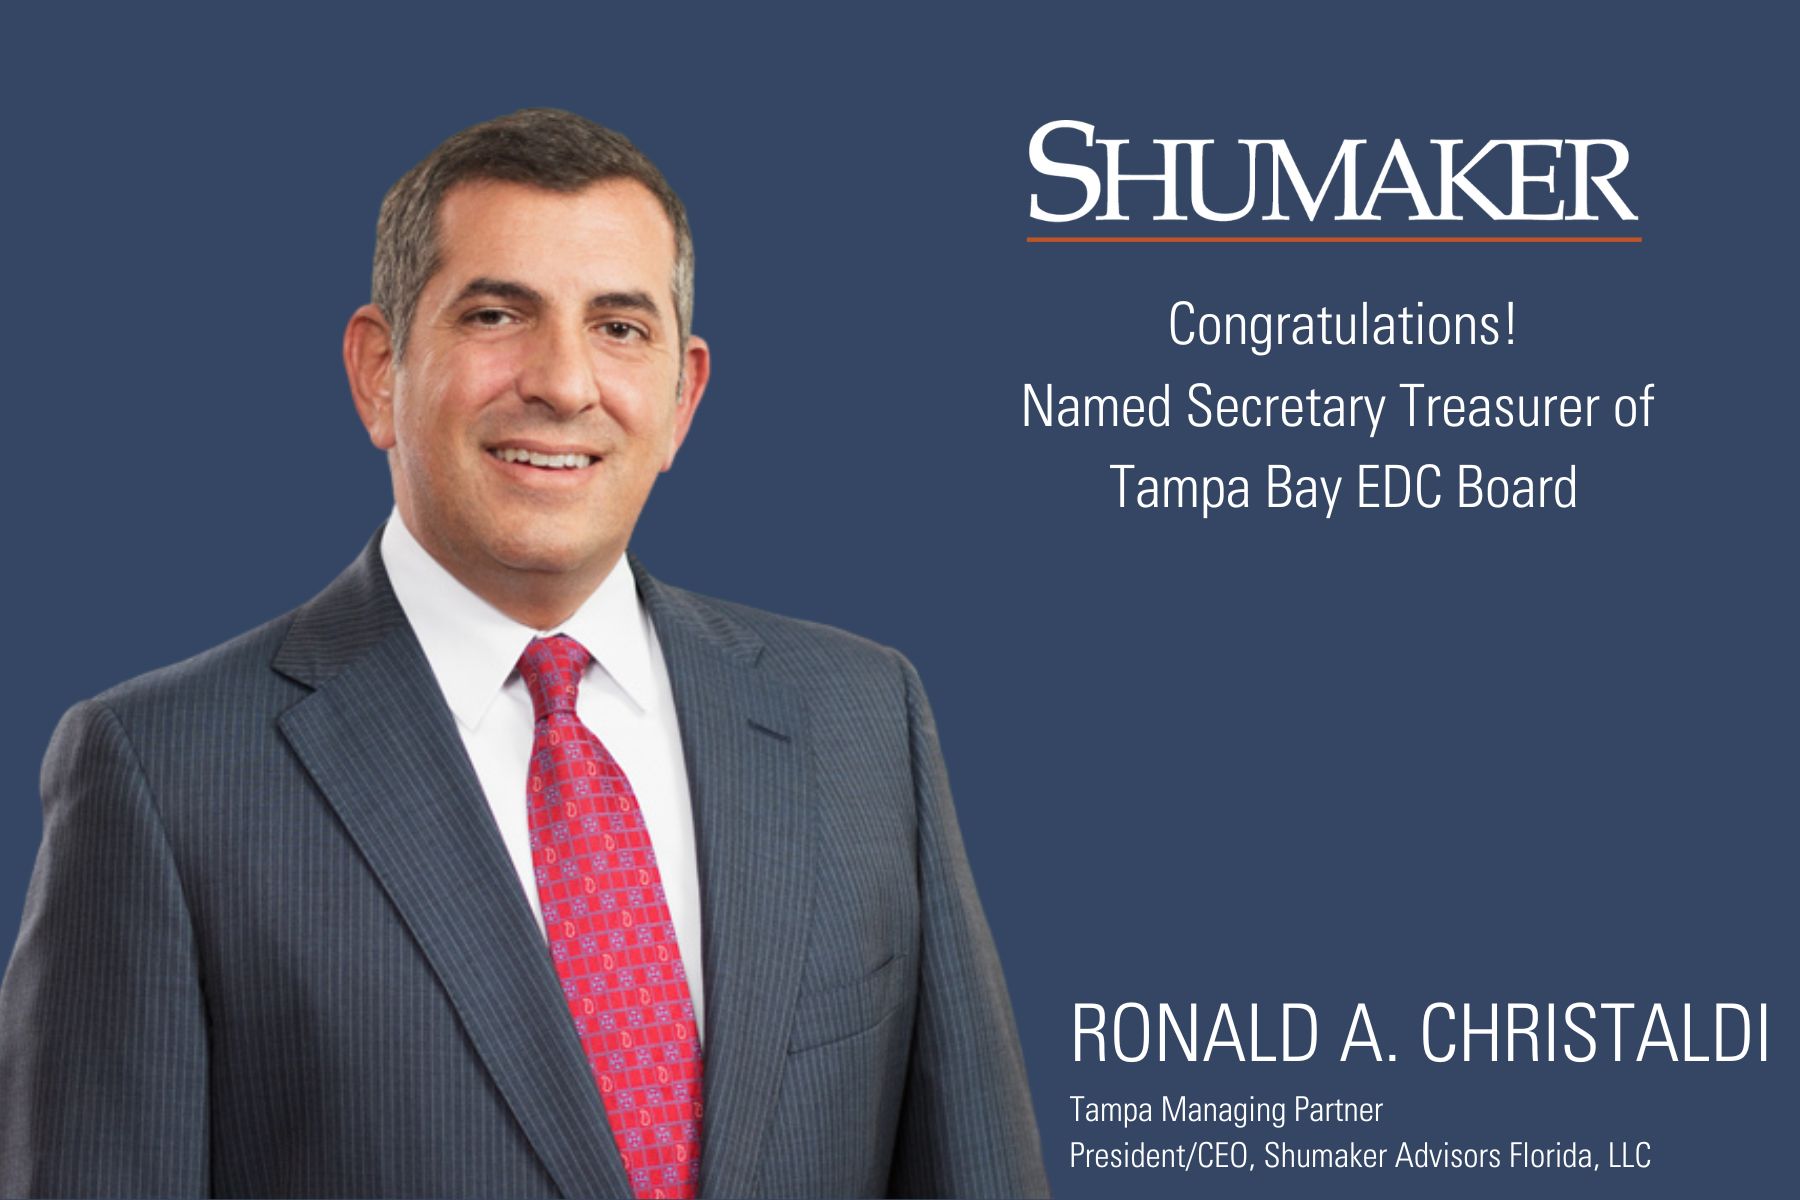 Shumaker’s Ron Christaldi Named Secretary Treasurer of Tampa Bay EDC Board